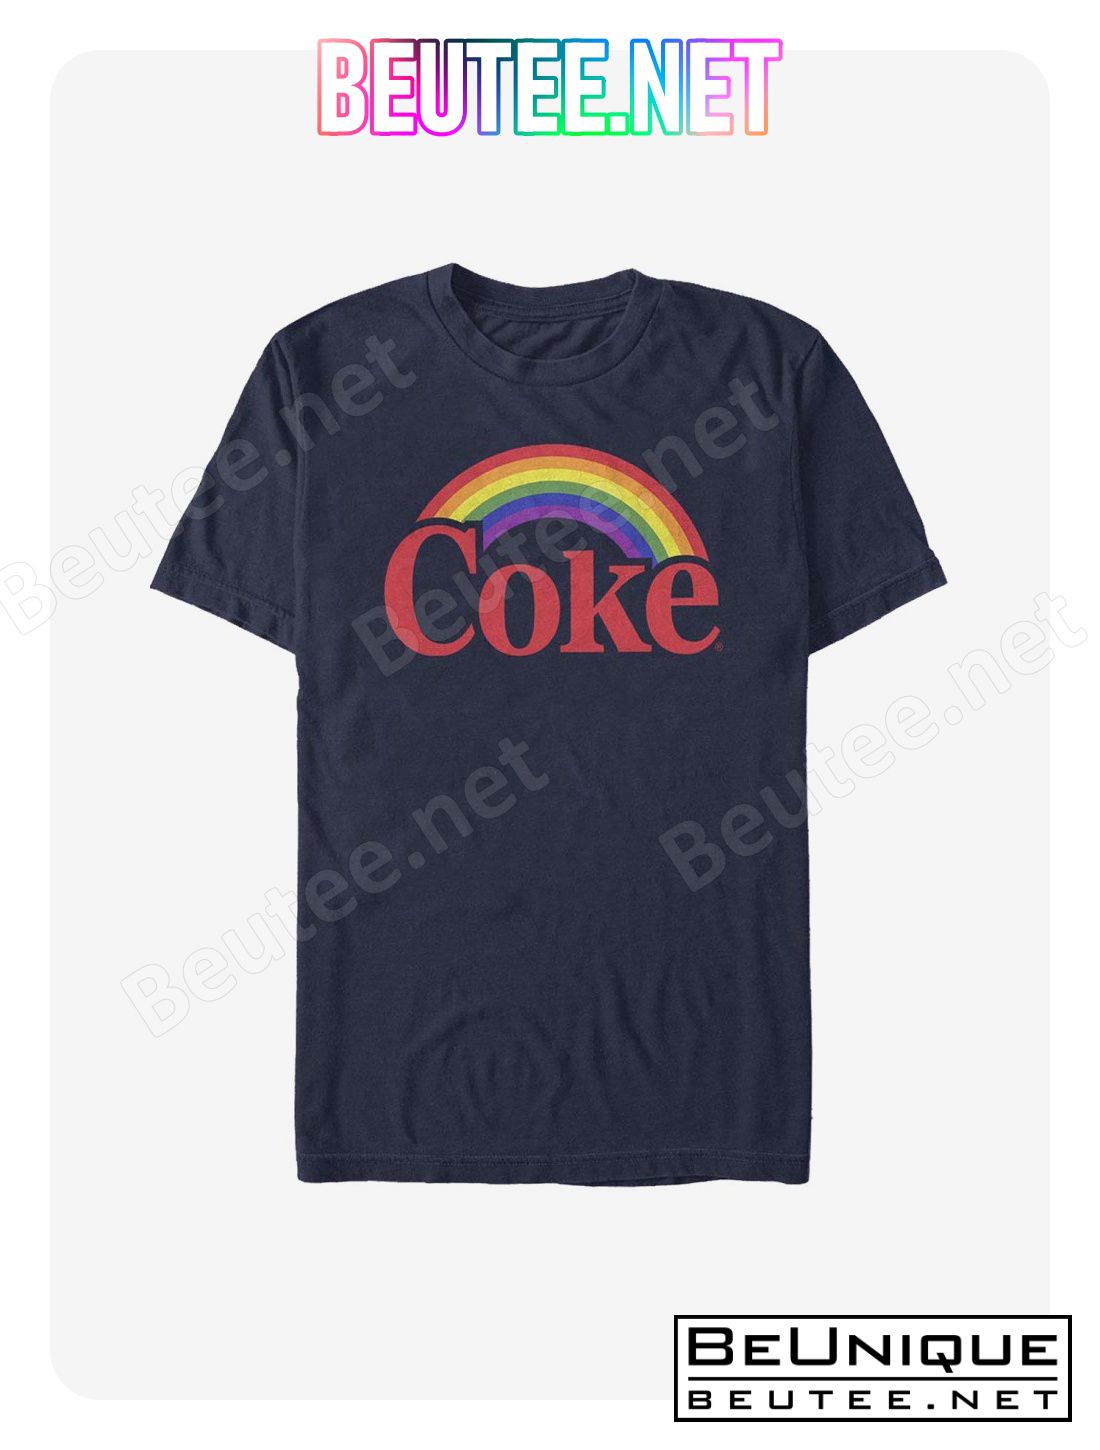 Coca-Cola Rainbow T-Shirt